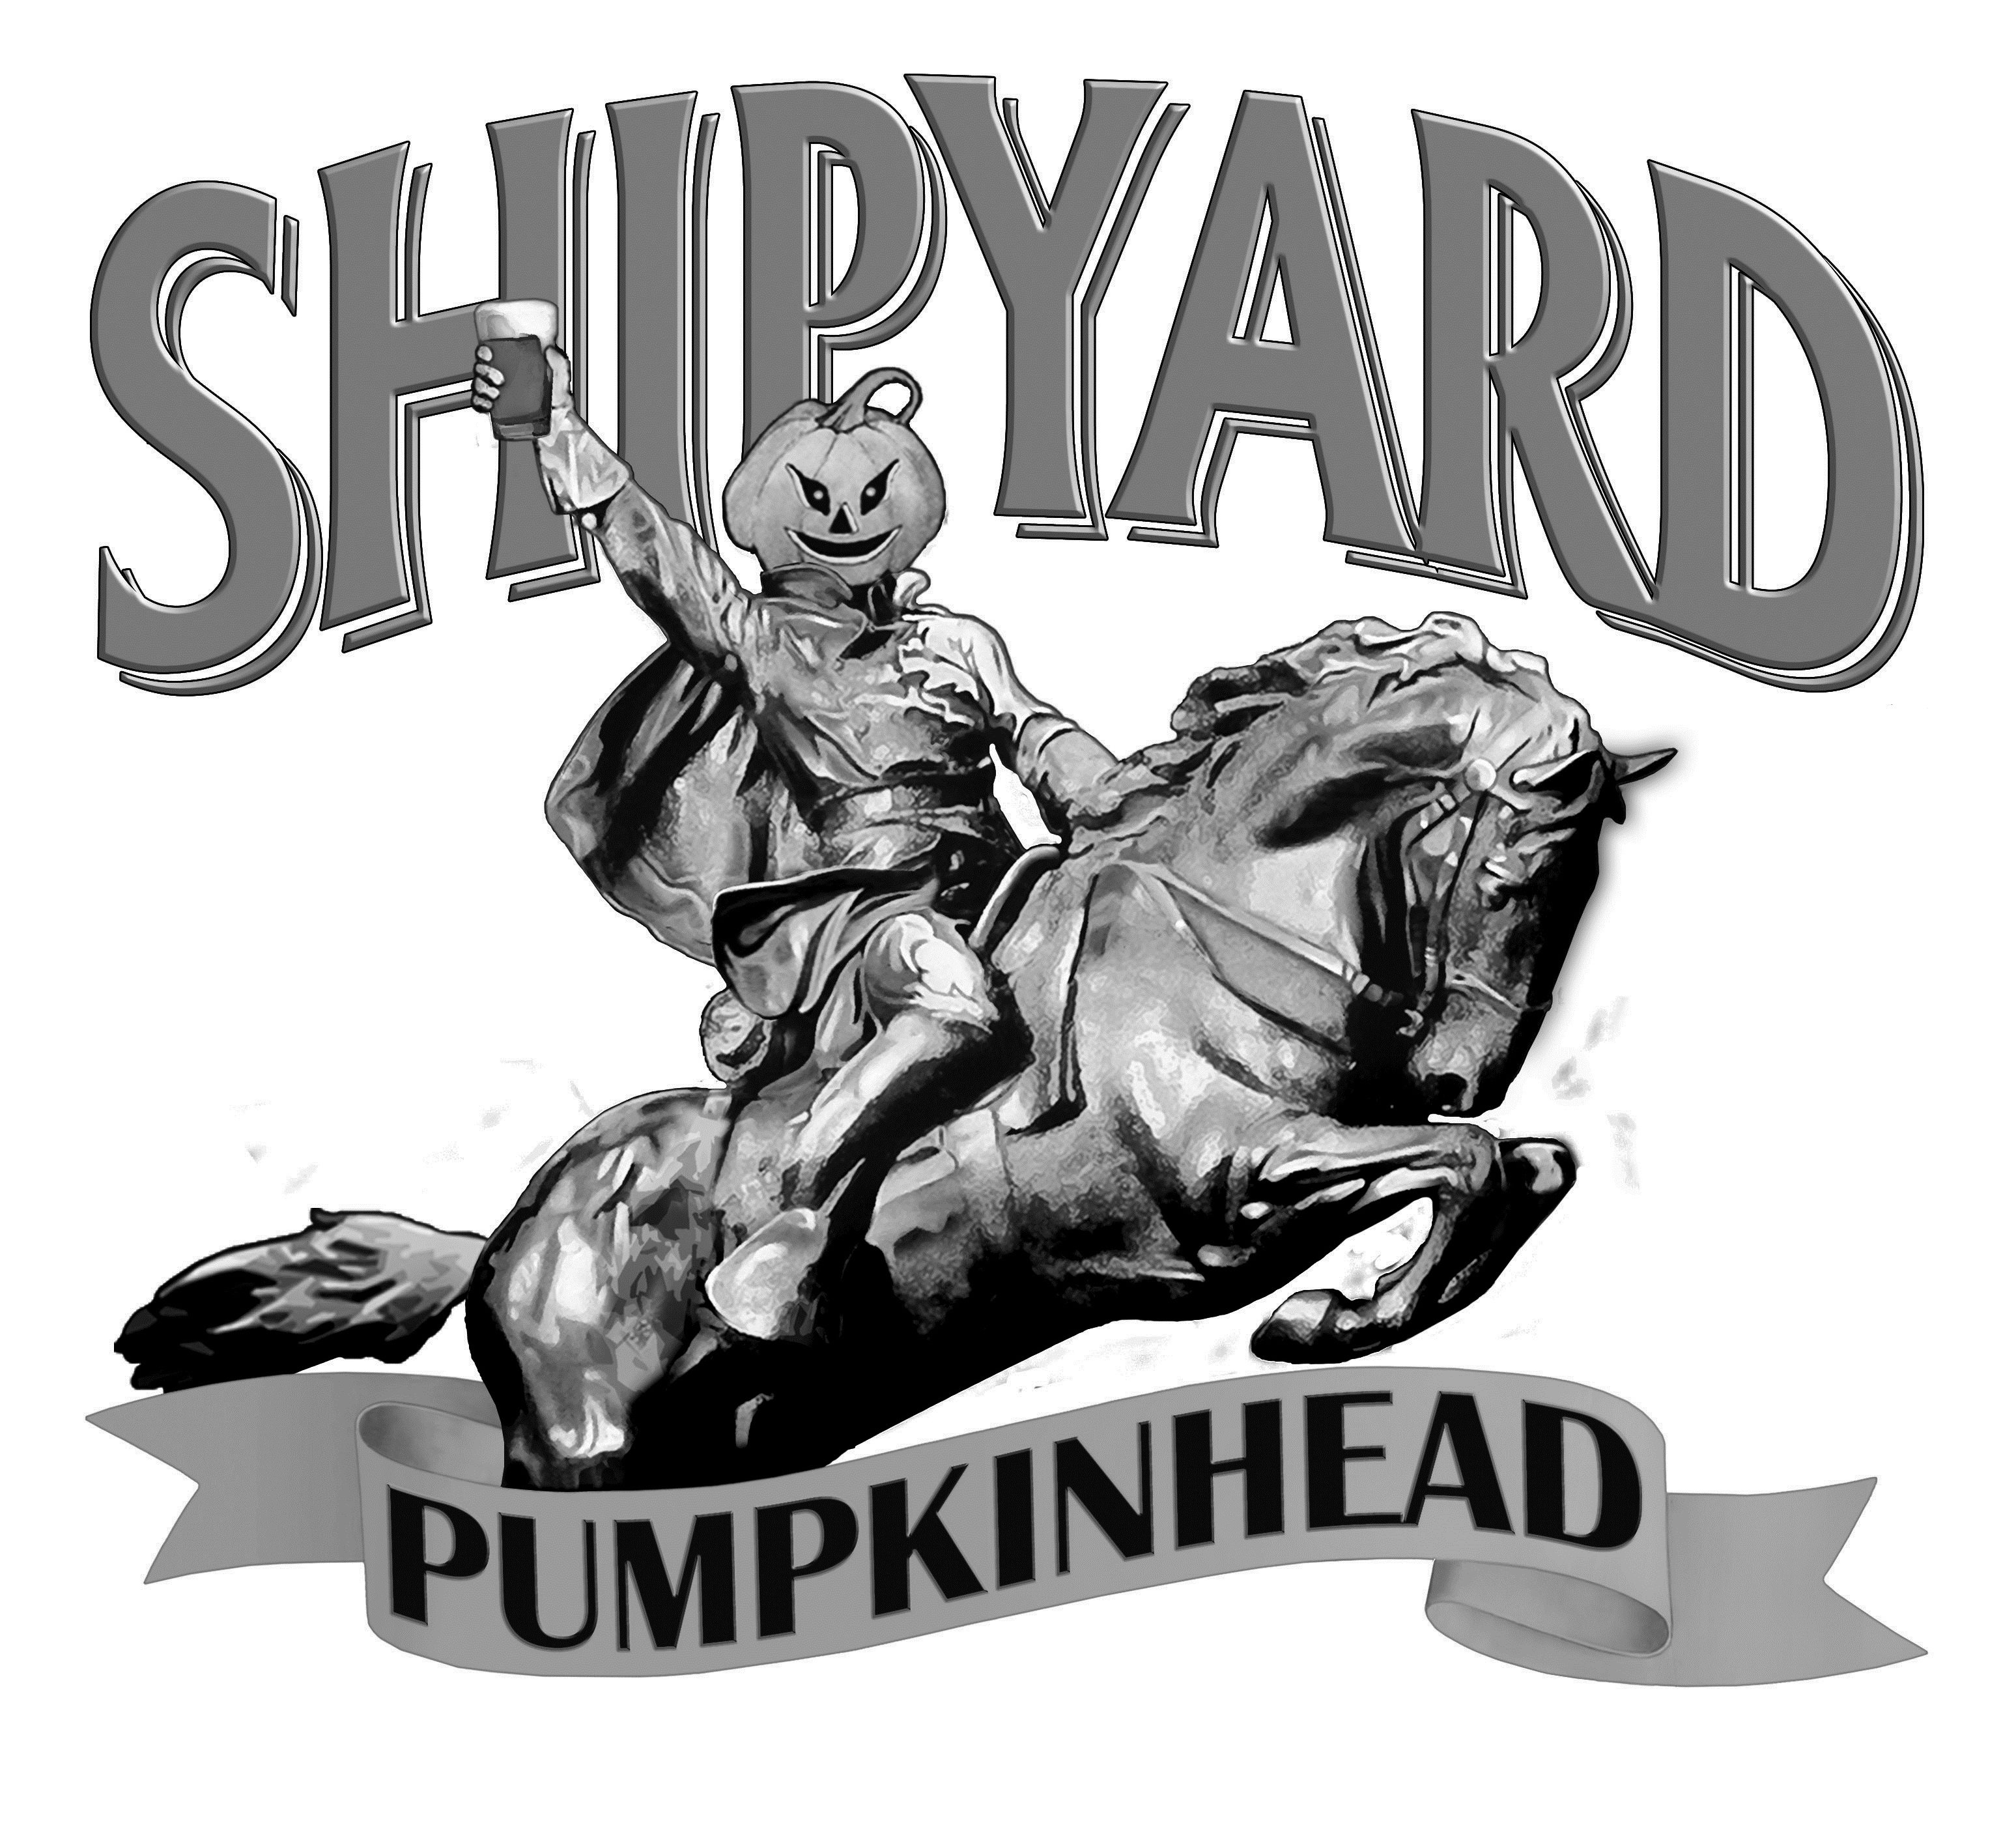  SHIPYARD PUMPKINHEAD